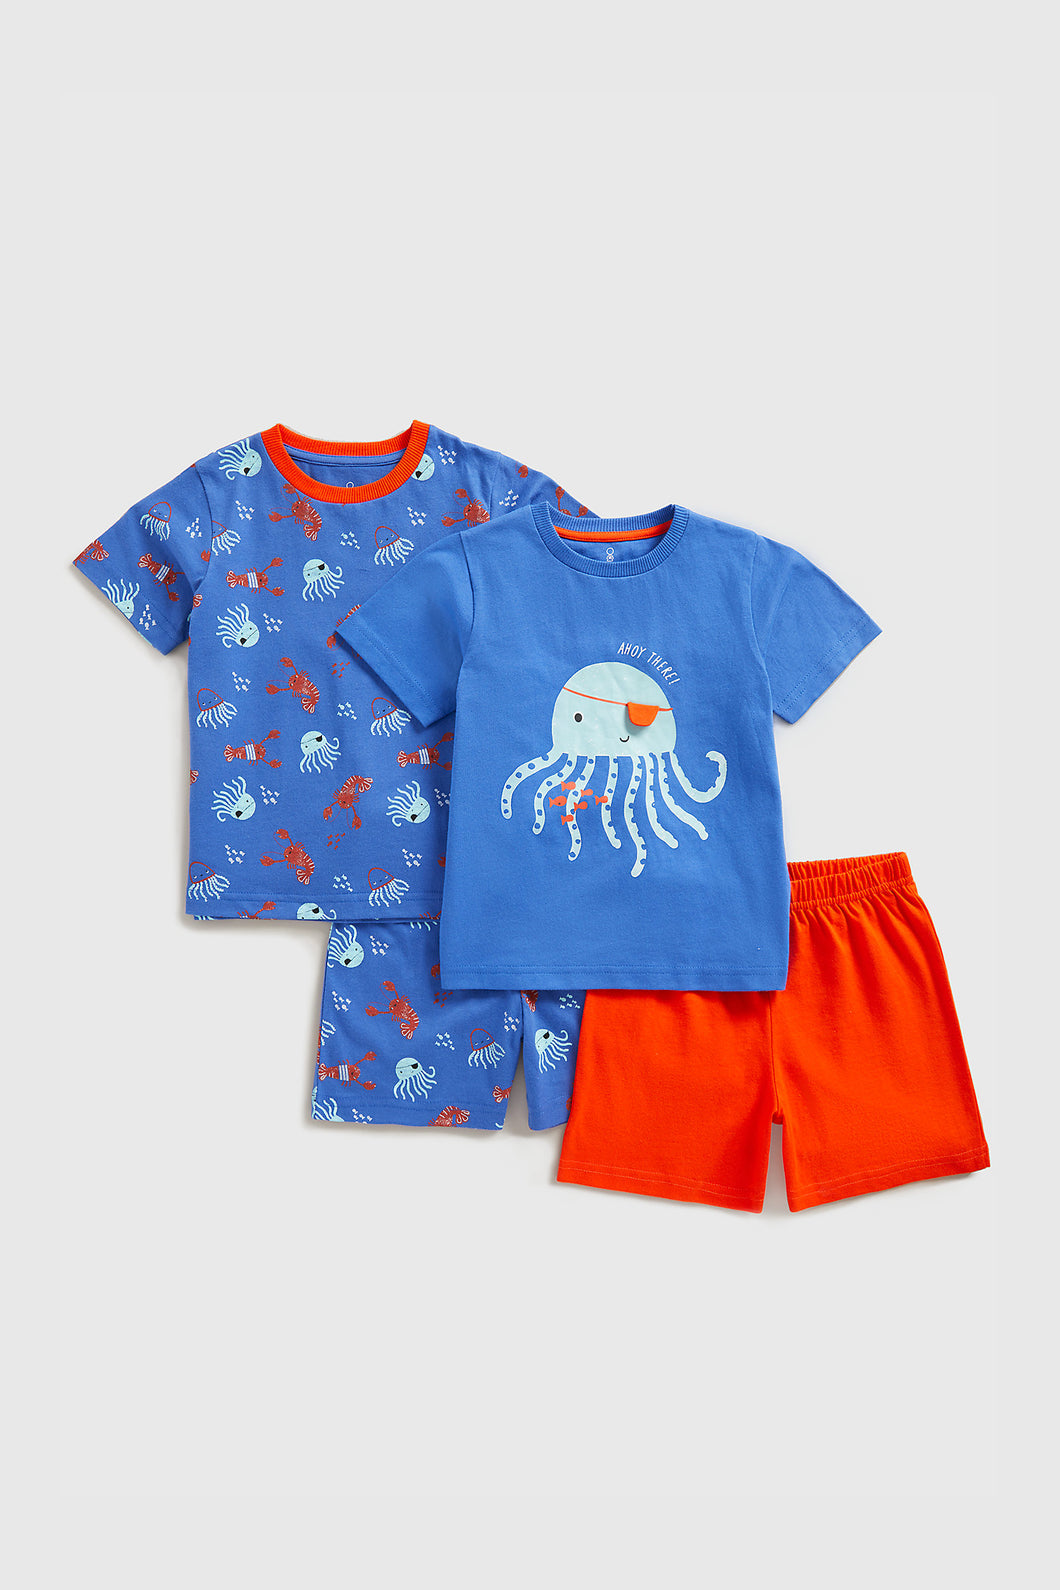 Mothercare Octopus Shortie Pyjamas - 2 Pack